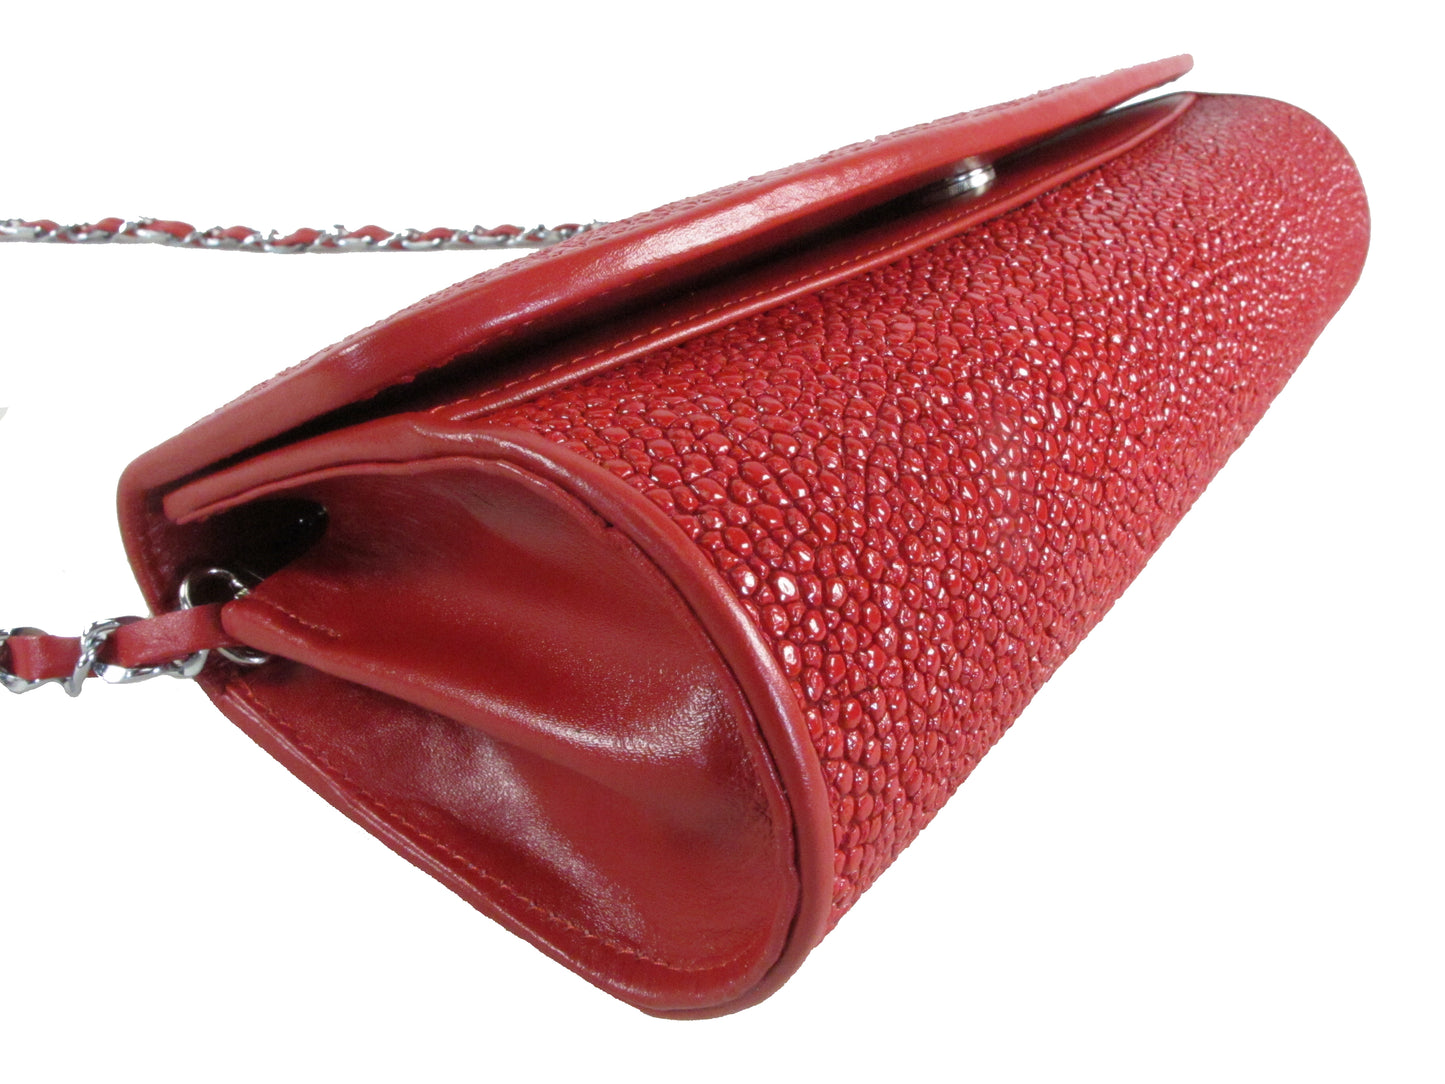 PELGIO Genuine Stingray Skin Leather Women's Messenger Bag Crossbody Purse